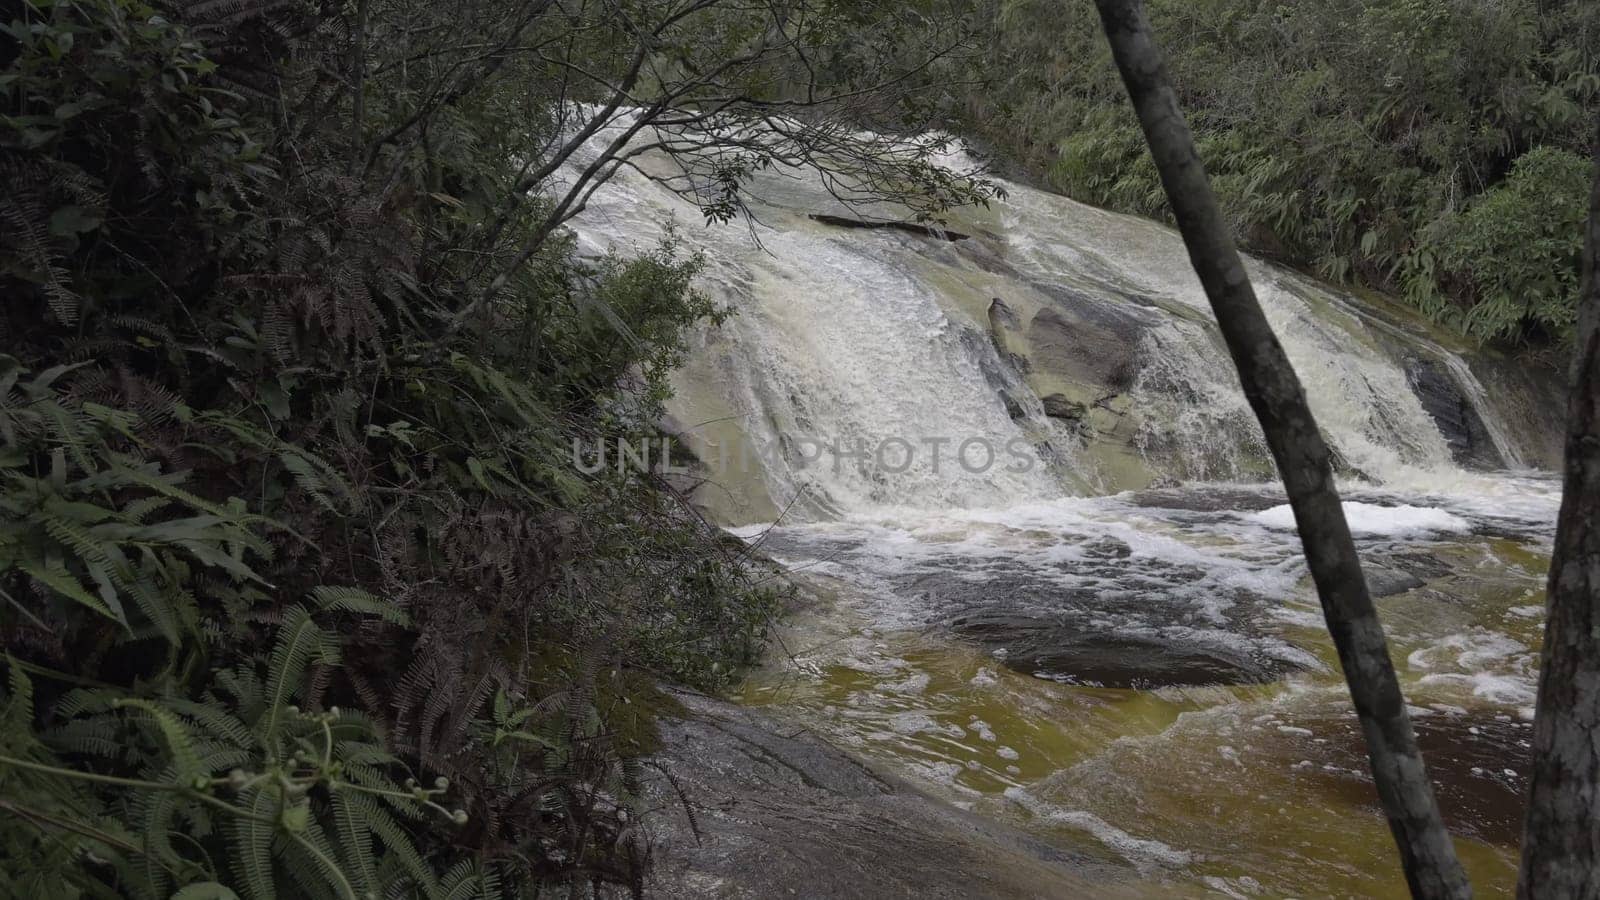 Slow Motion Video Approaching Waterfall in Lush Jungle by FerradalFCG